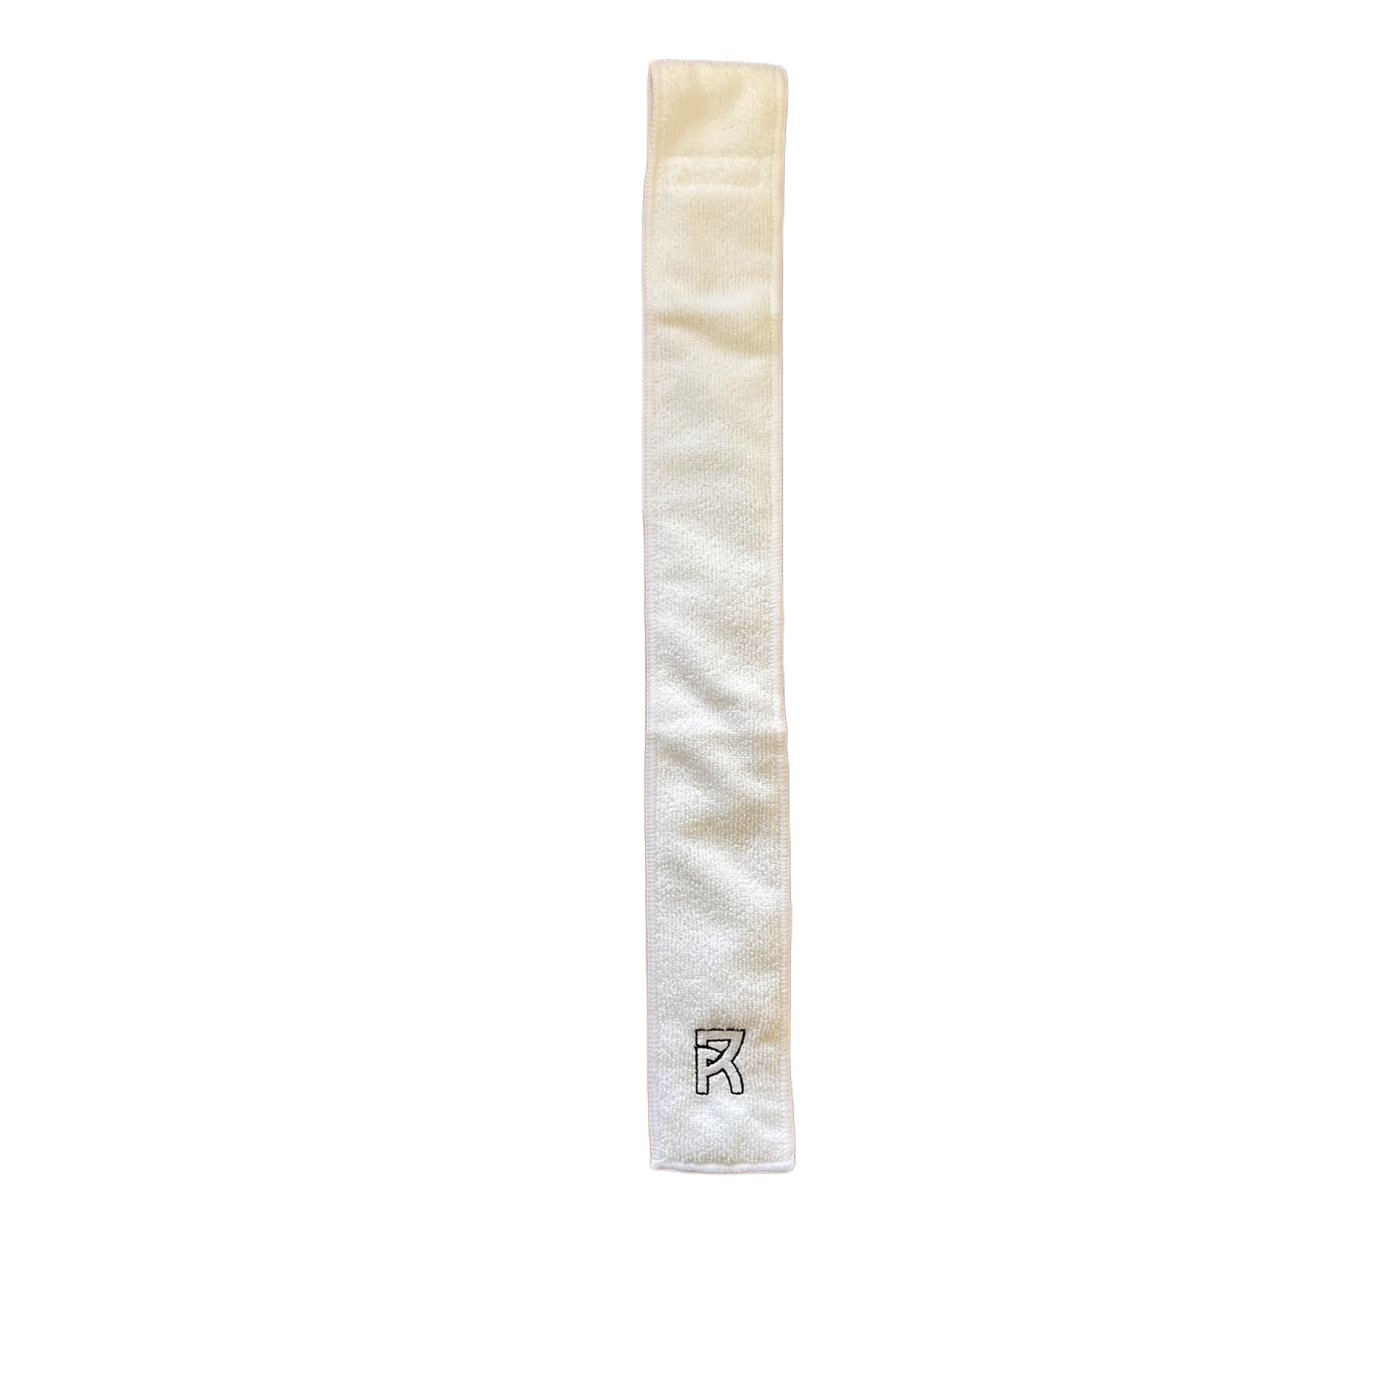 Reyrr Gameday Towel Skill - BCN - Premium  from Reyrr Athletics - Shop now at Reyrr Athletics